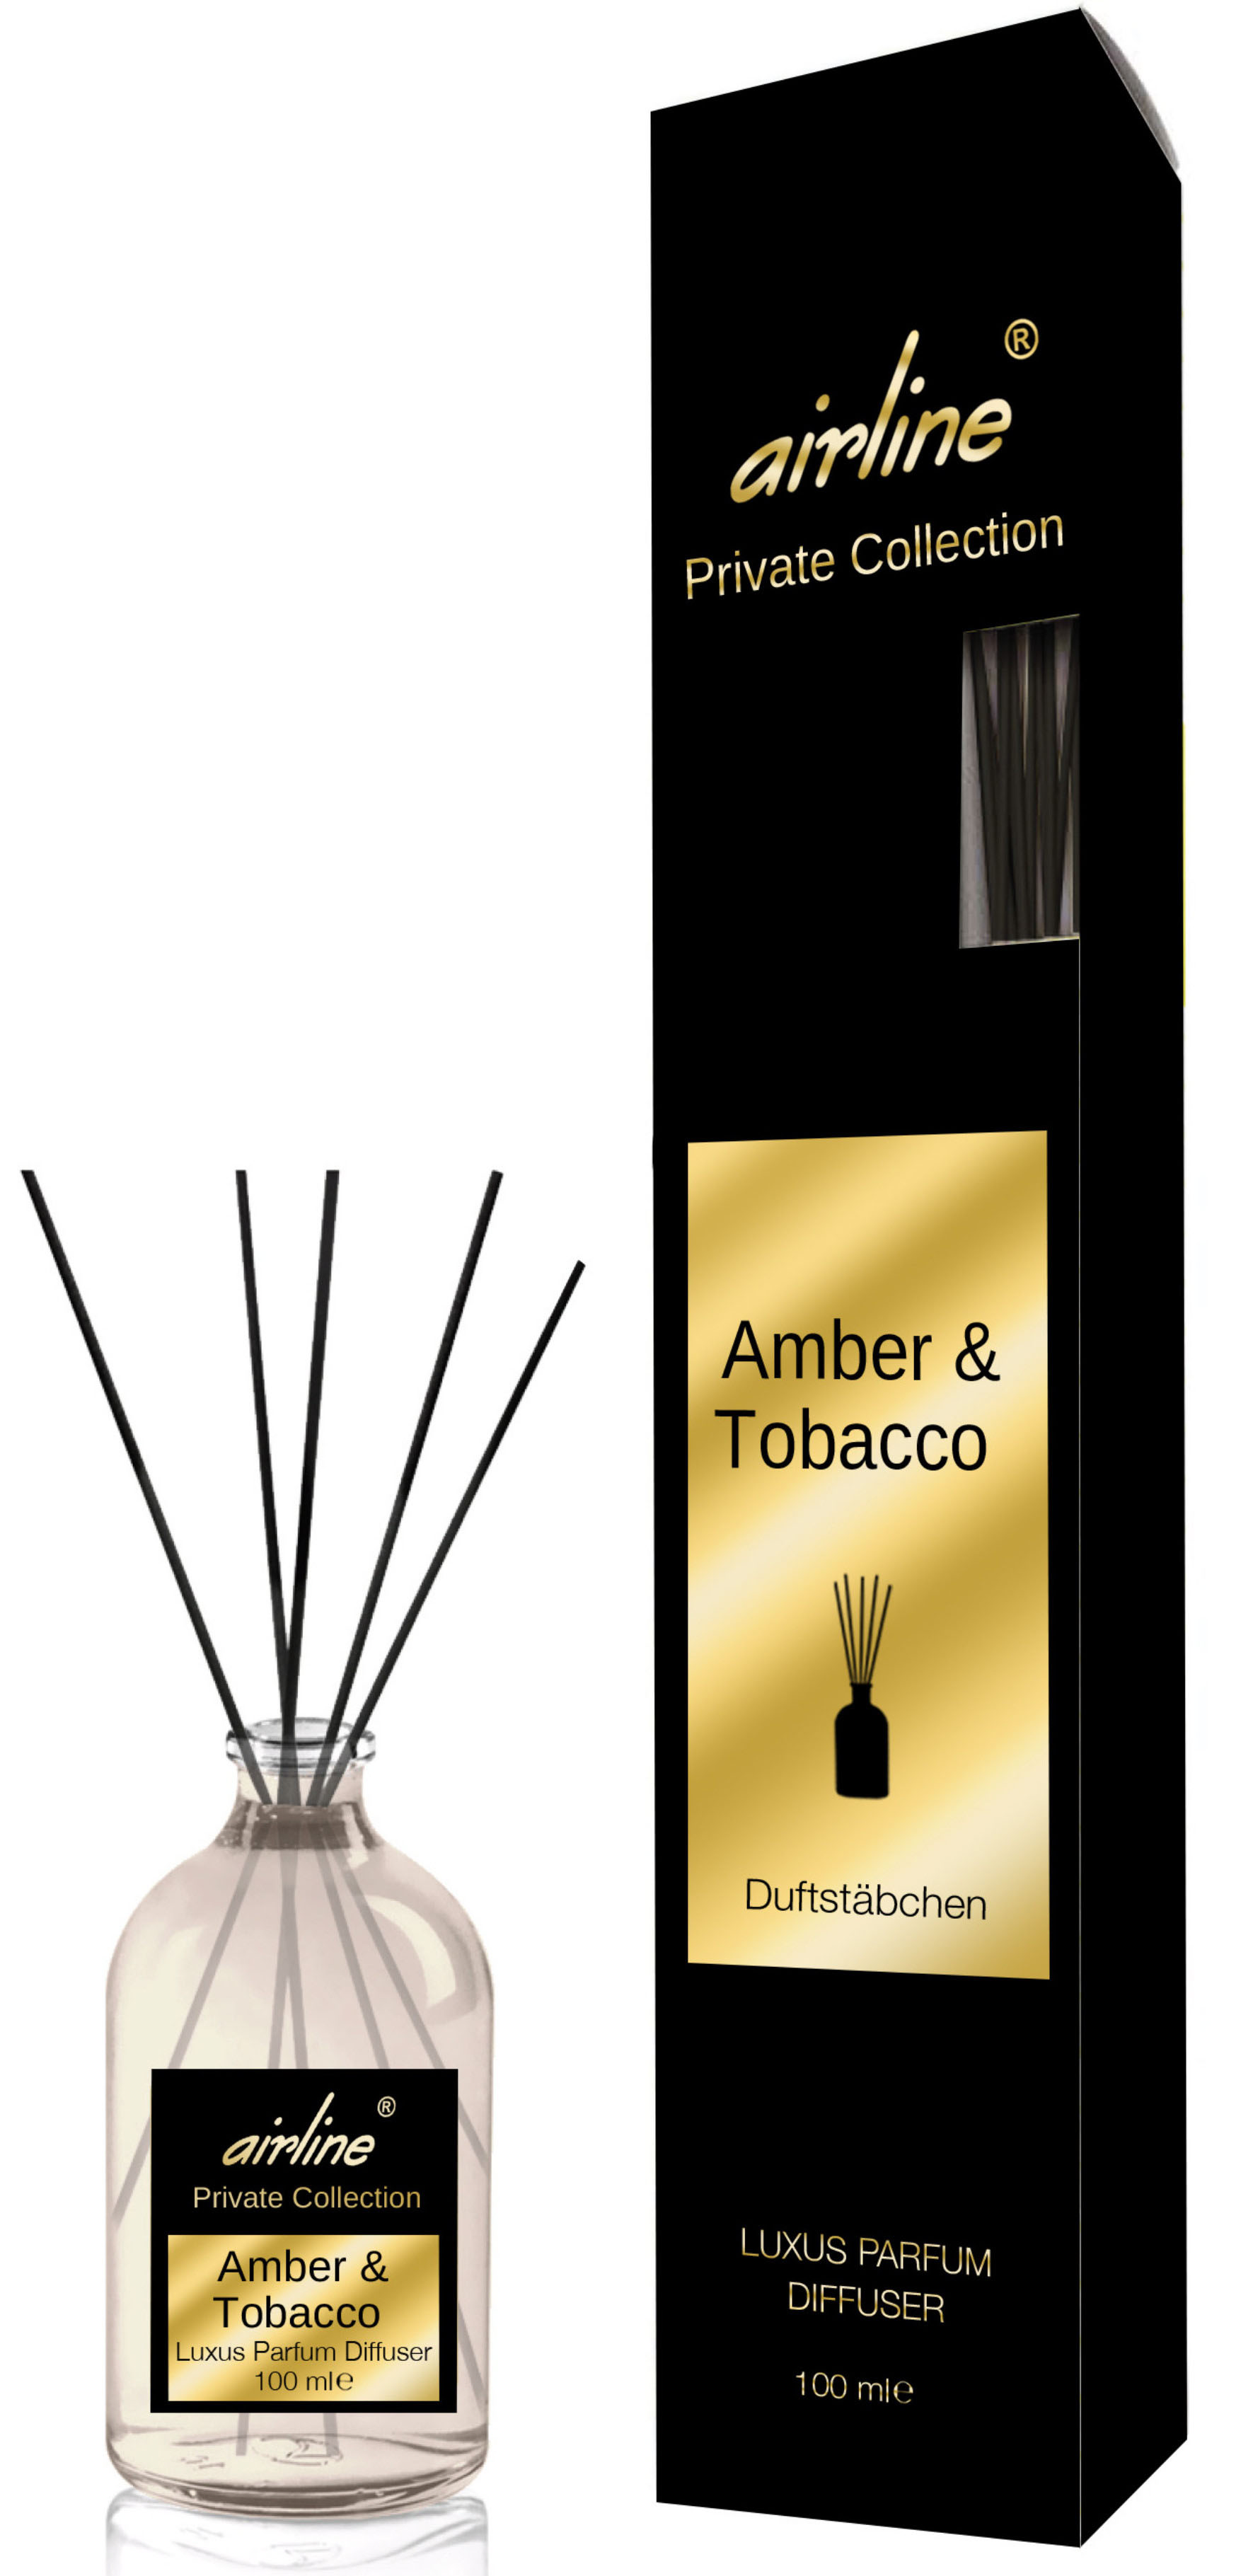 00499 - Private Collection Luxus Parfum Diffuser 100ml-Amber & Tobacco